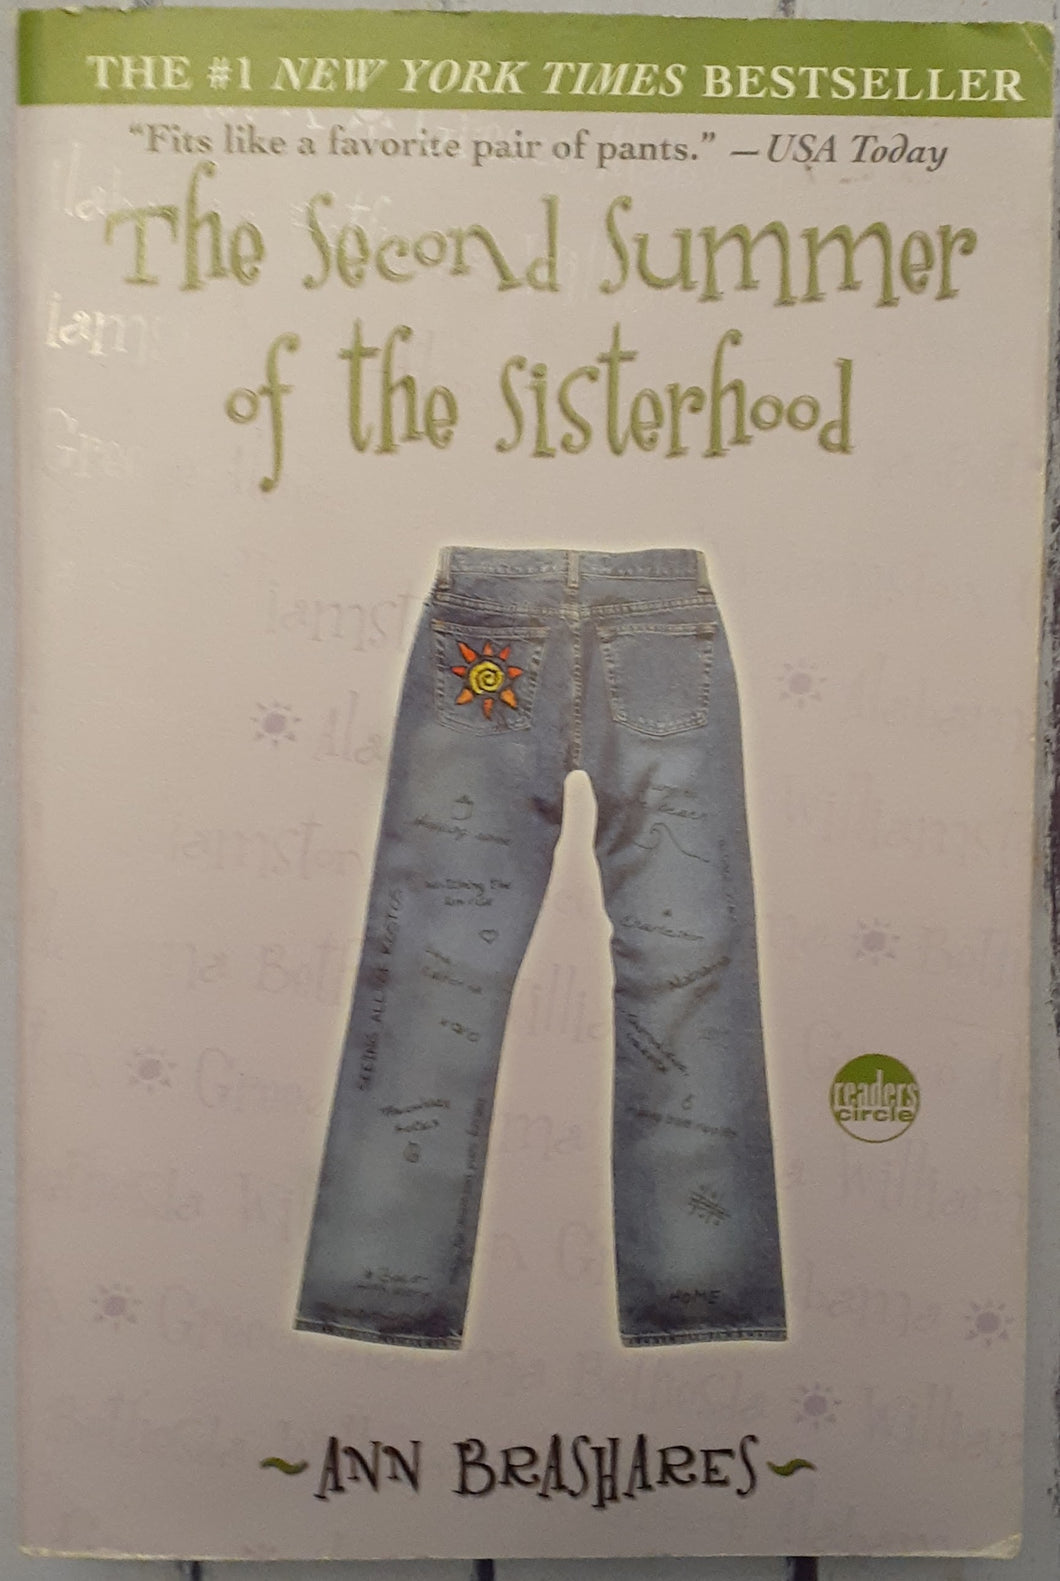 The Second Summer of the Sisterhood: Sisterhood of Traveling Pants, Book 2